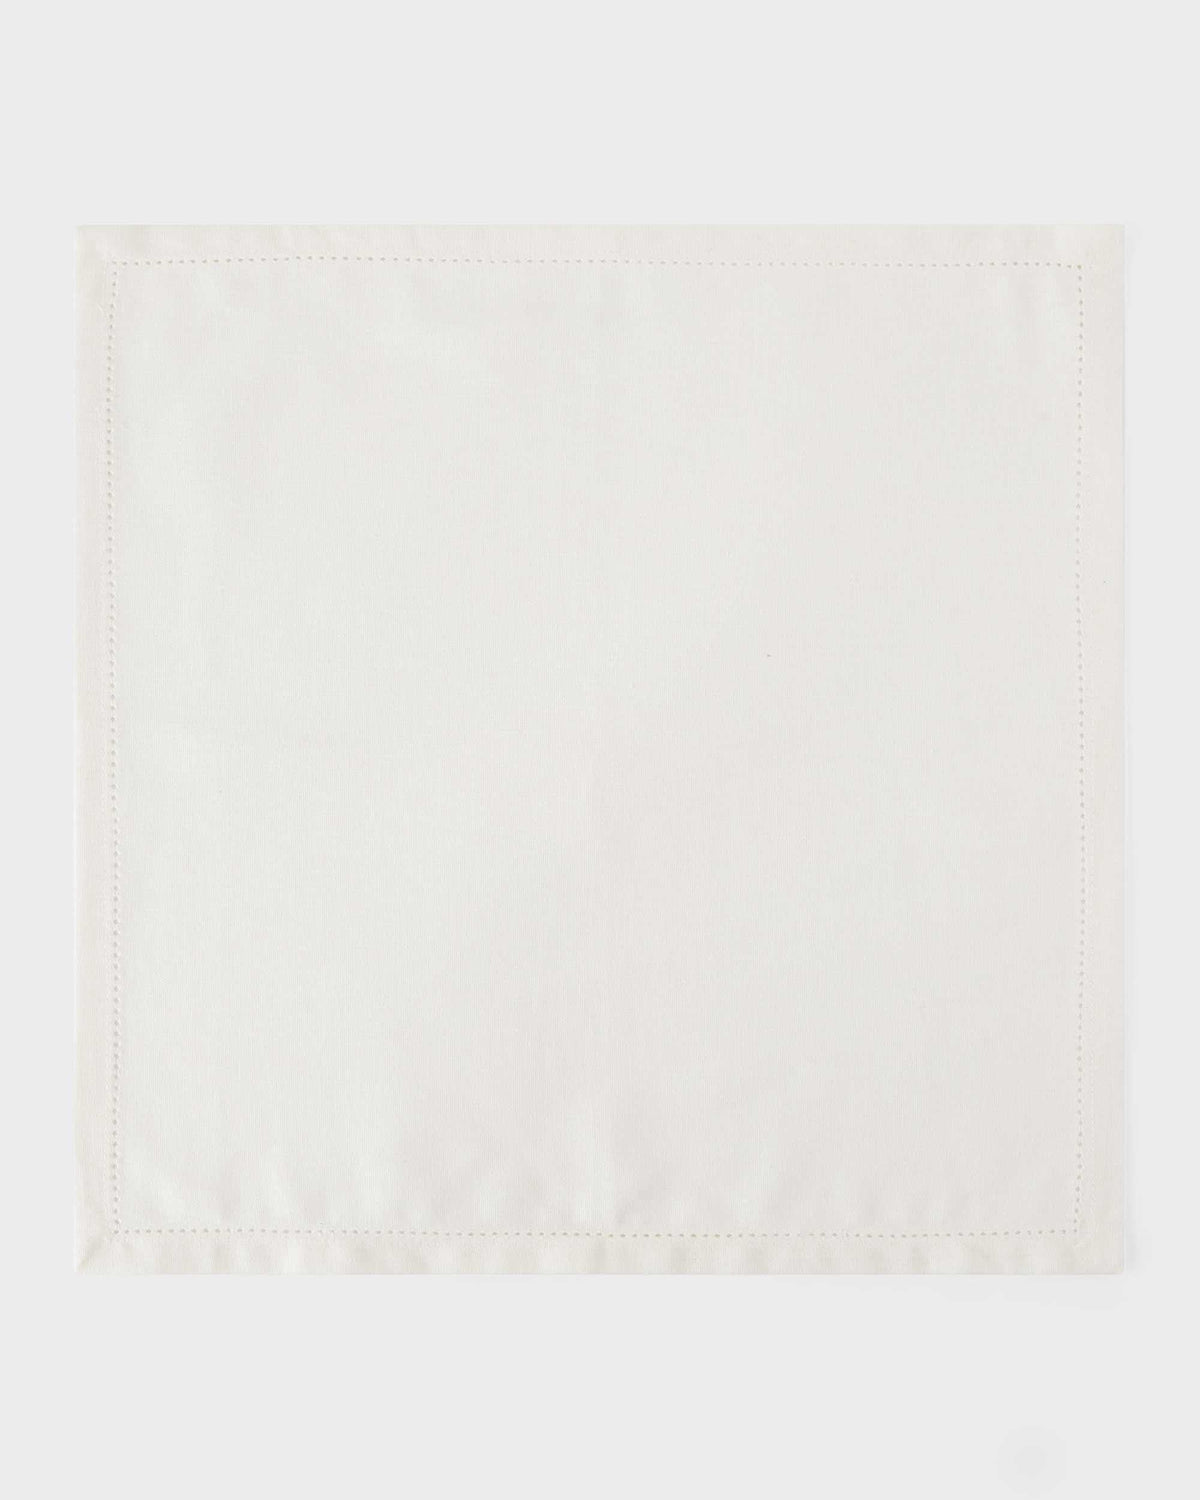 Linen Napkin - Off White 40x40 cm - Von Home